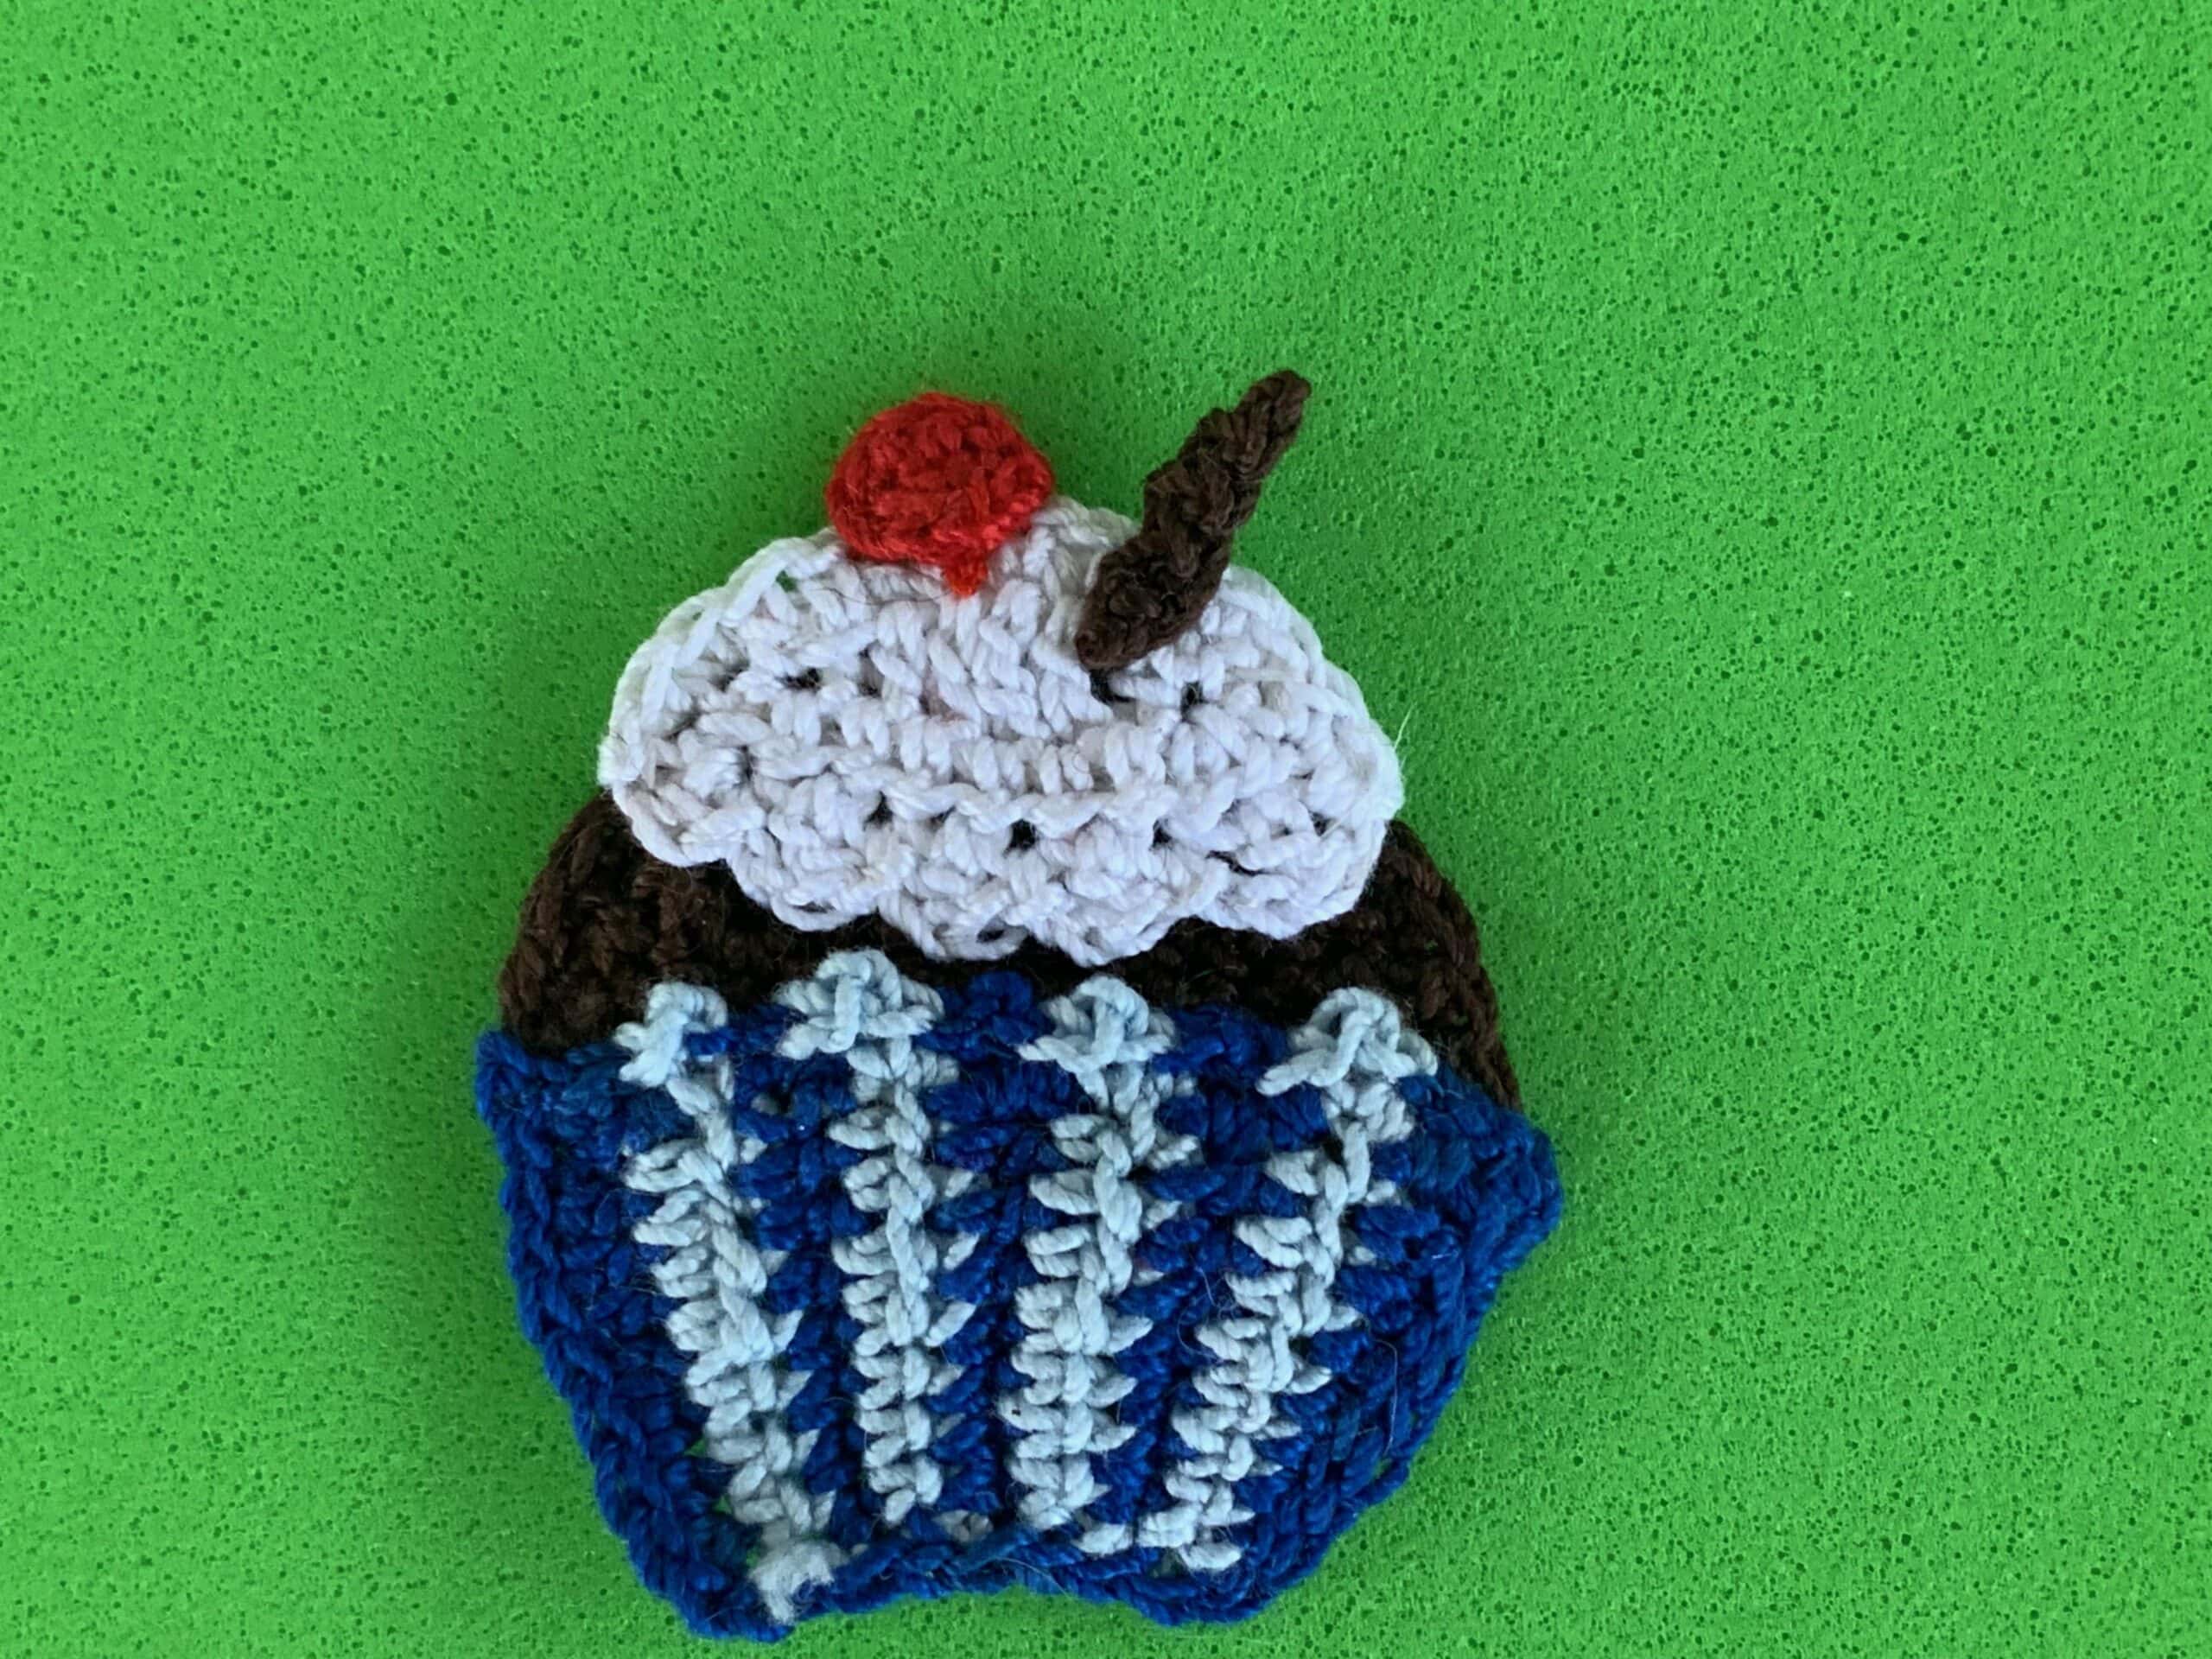 Finished crochet cupcake 2 ply landscape